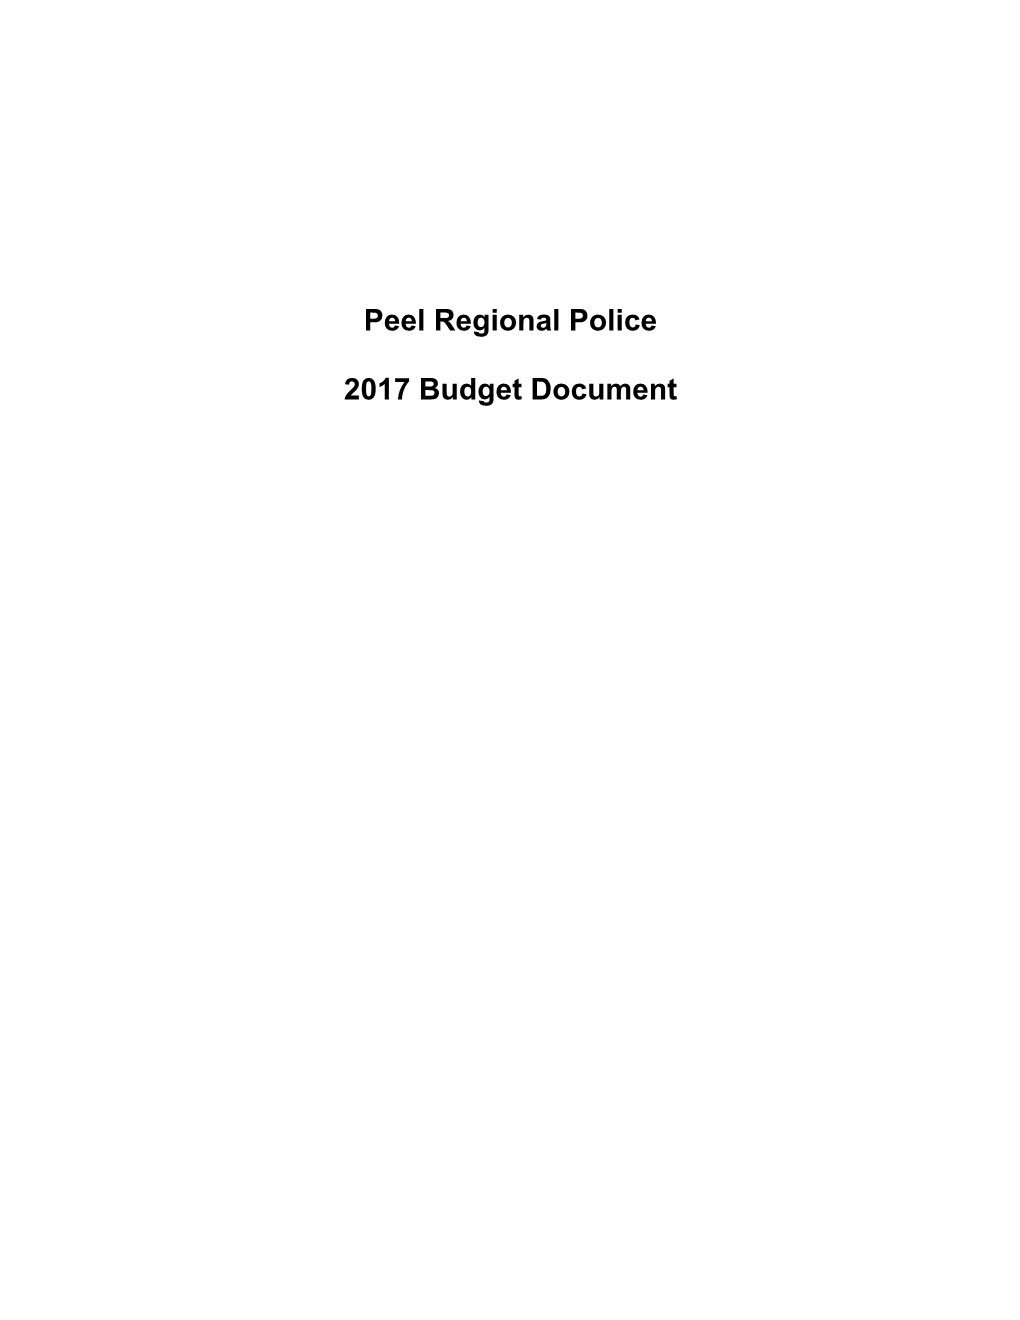 Peel Regional Police 2017 Budget Document